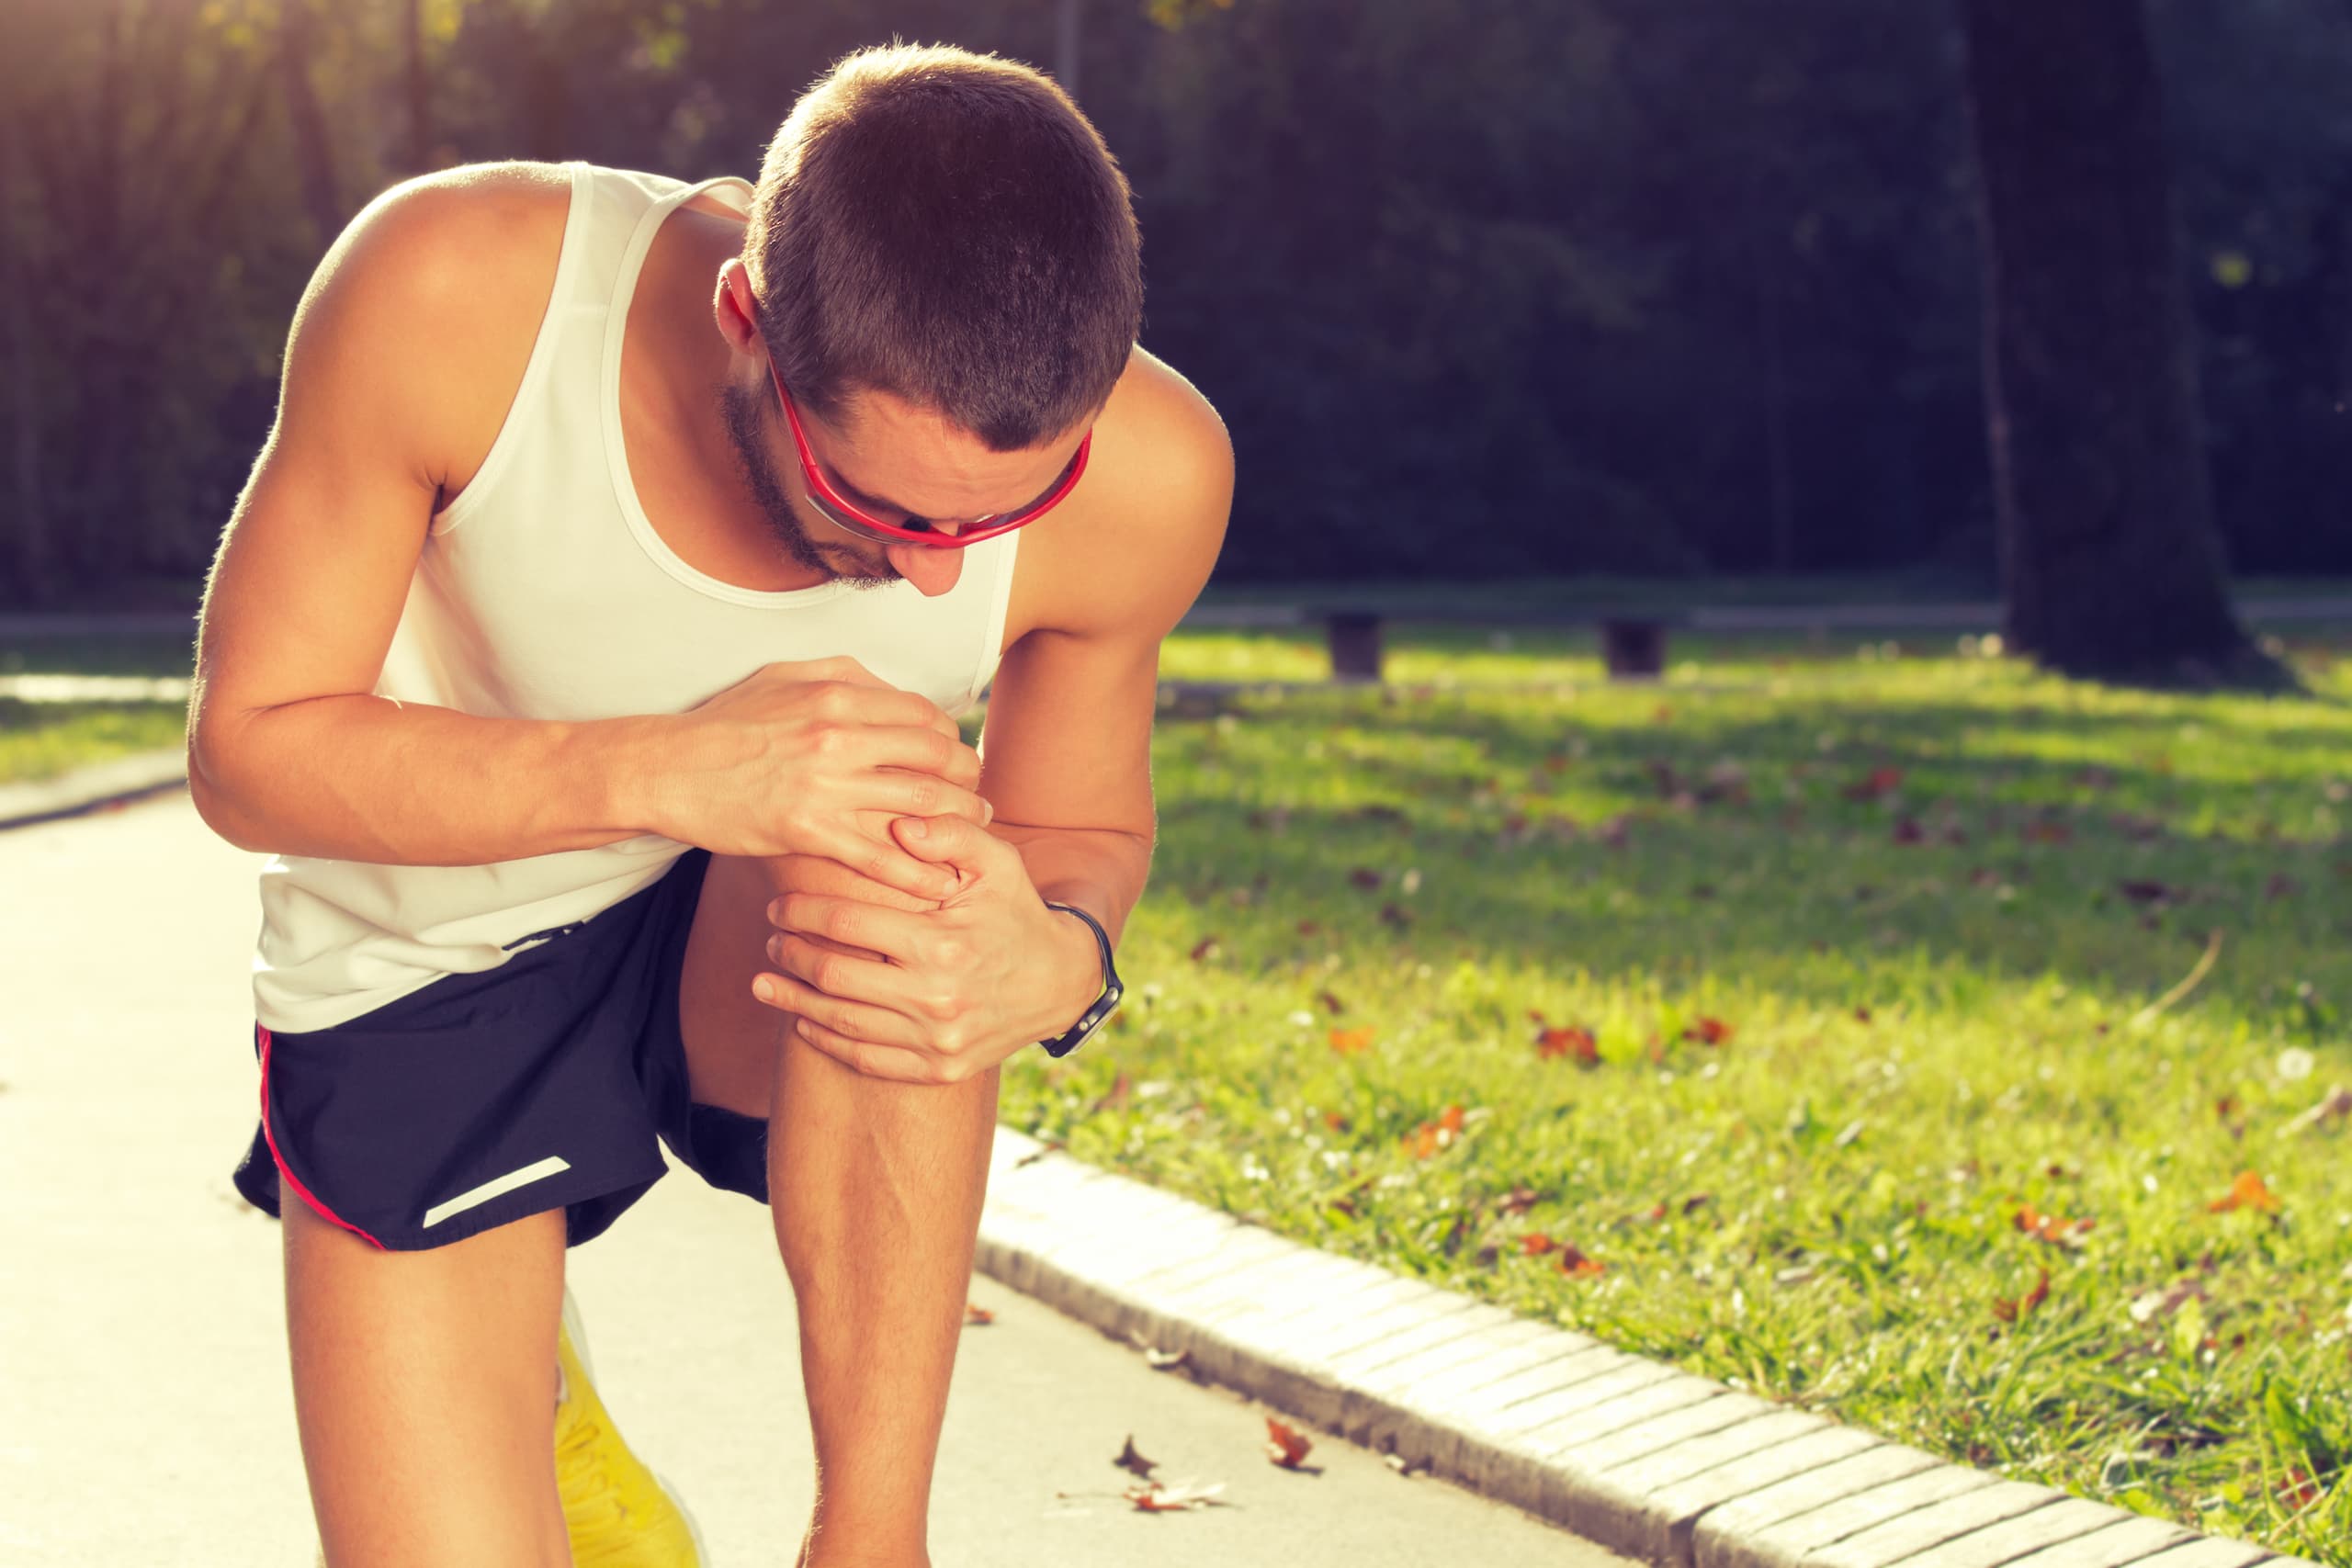 runner's knee treatment | athlete favouring knee while running